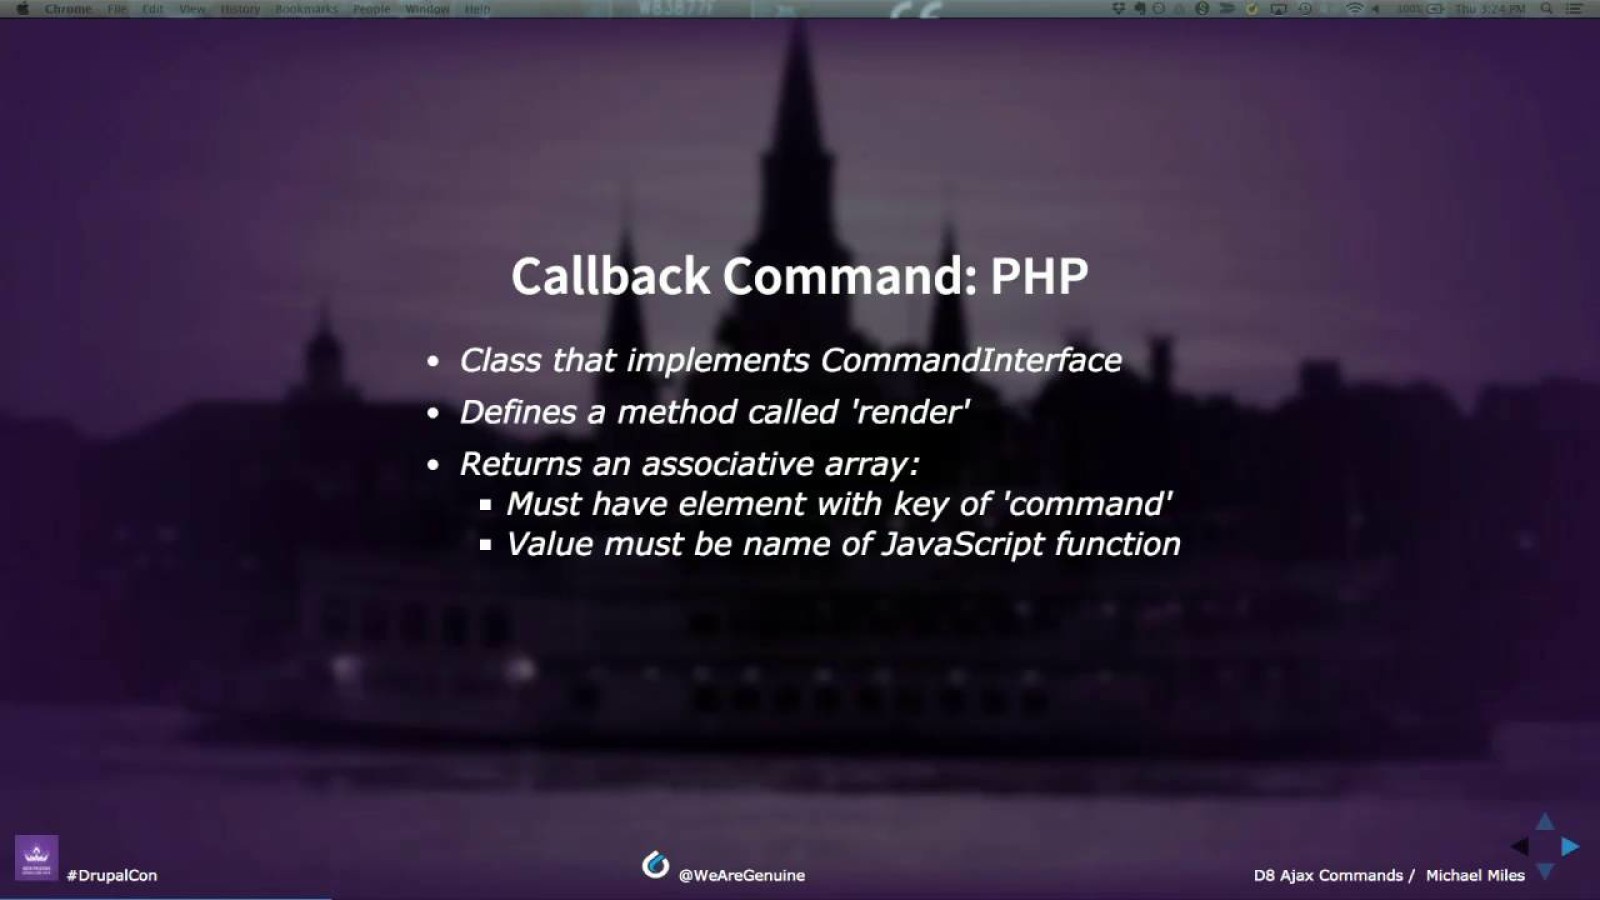 Ajax Callback Commands in Drupal 8